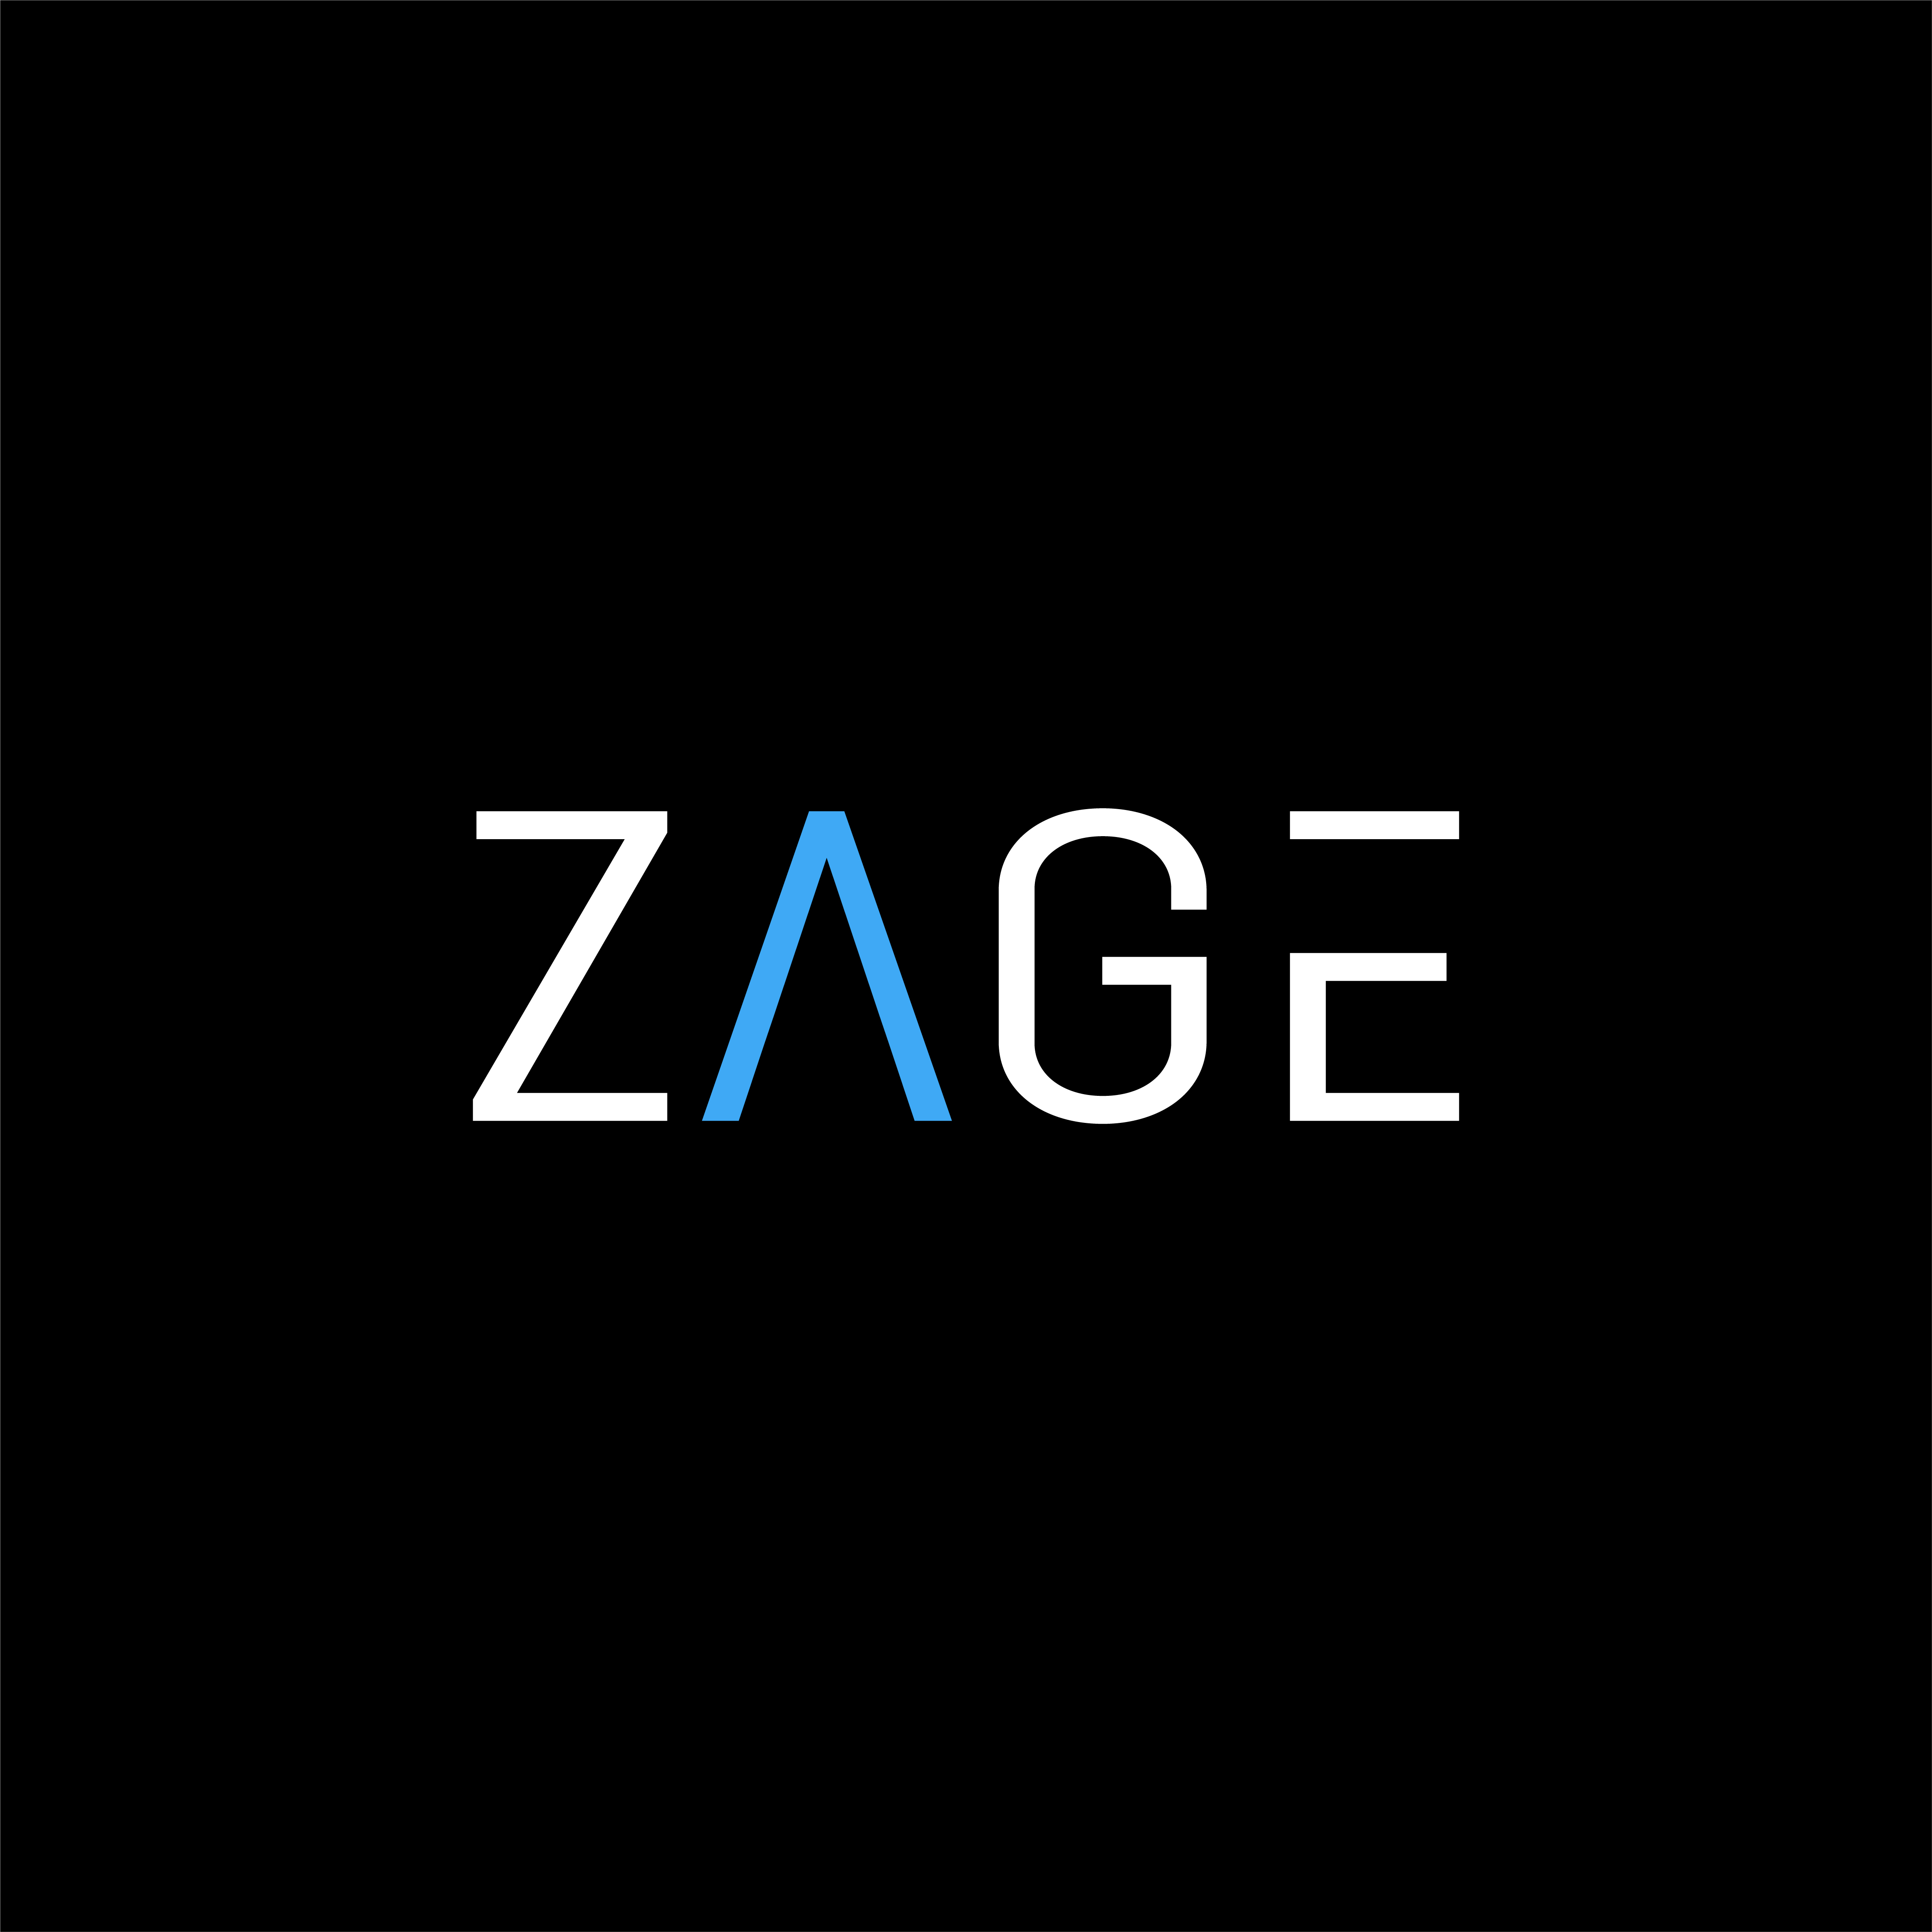 Zage Marketing Group